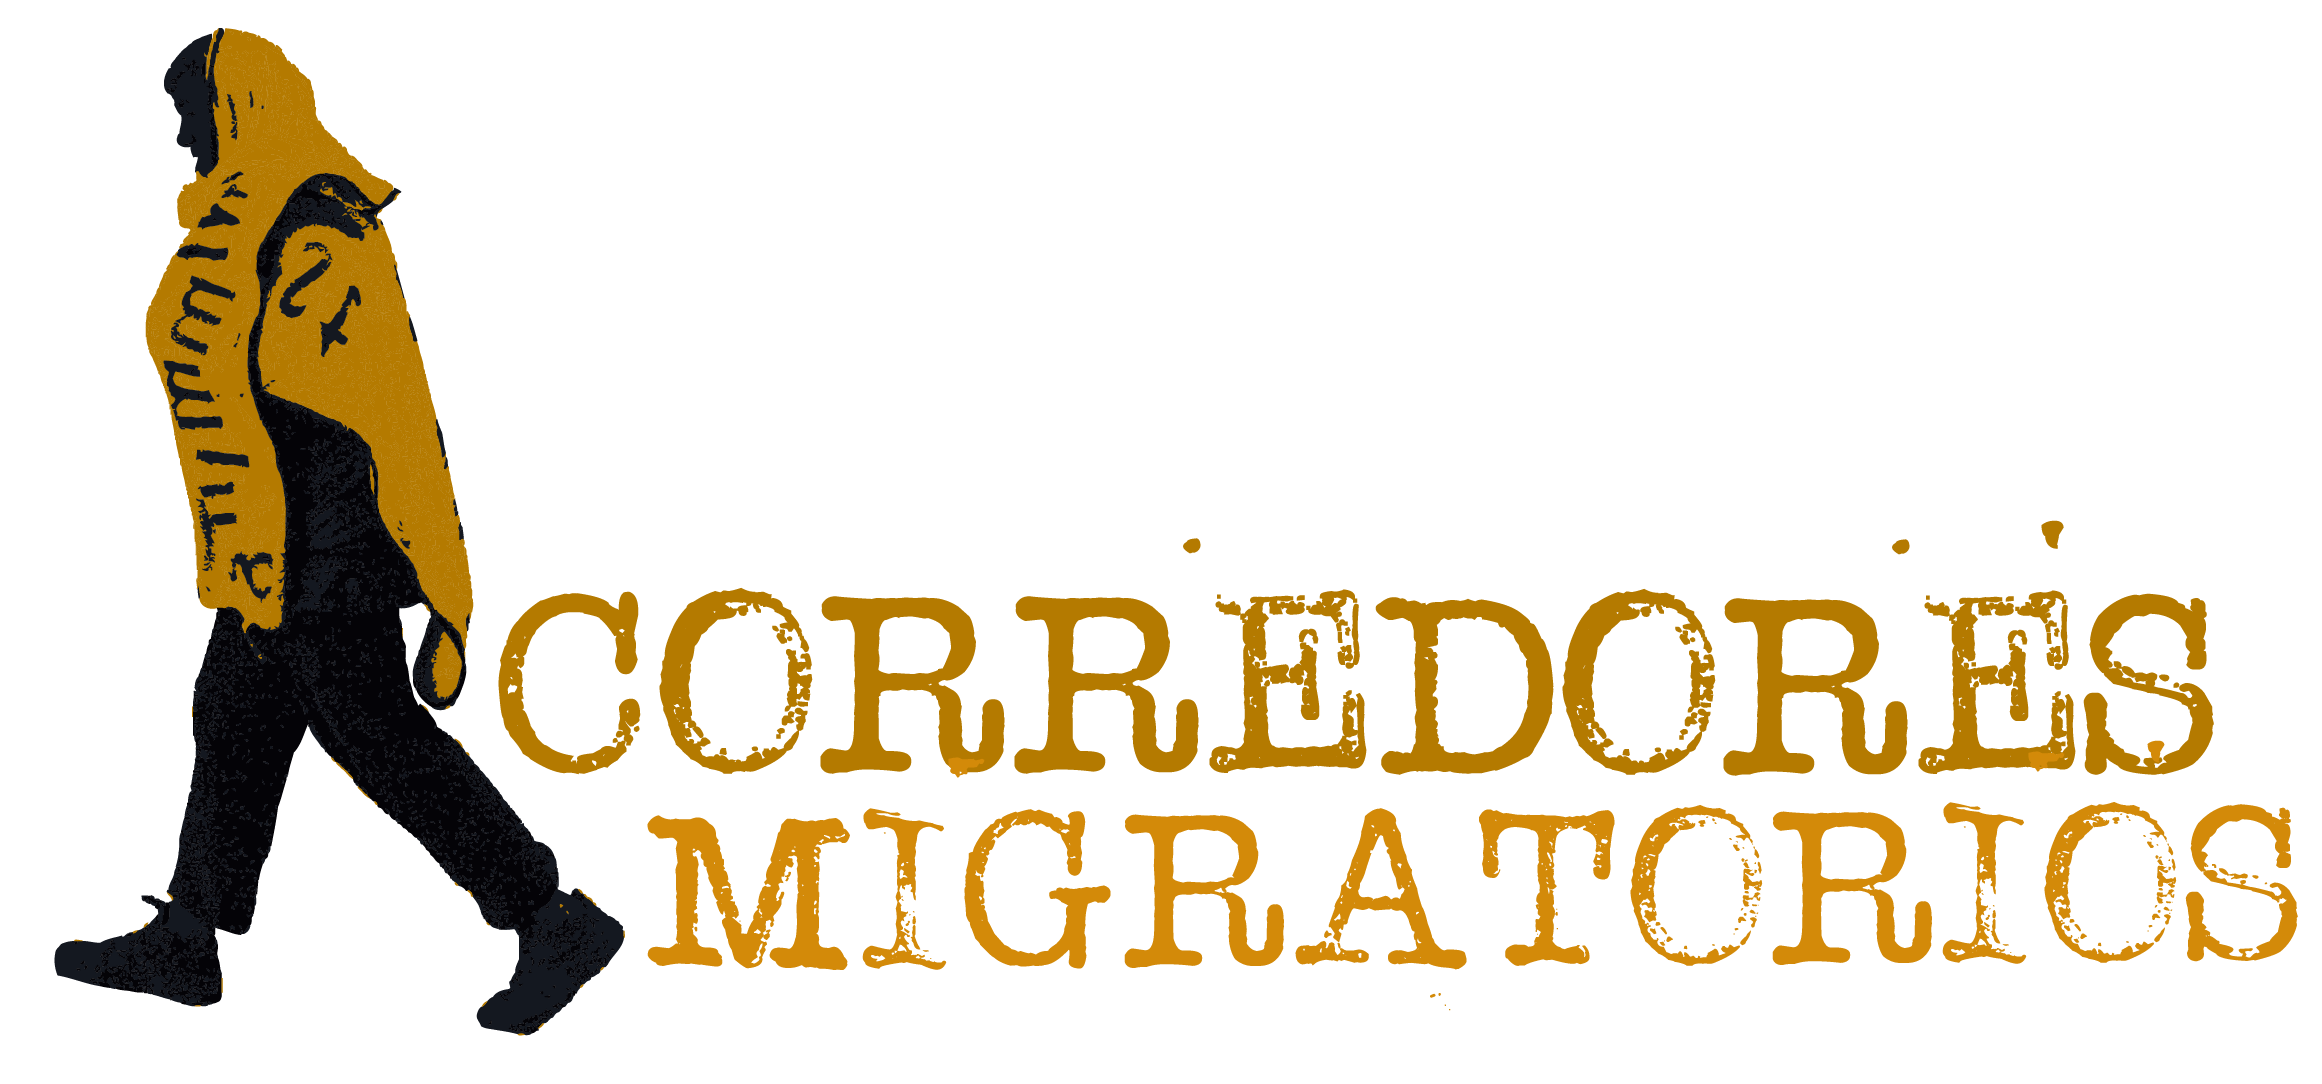 Corredores Migratorios